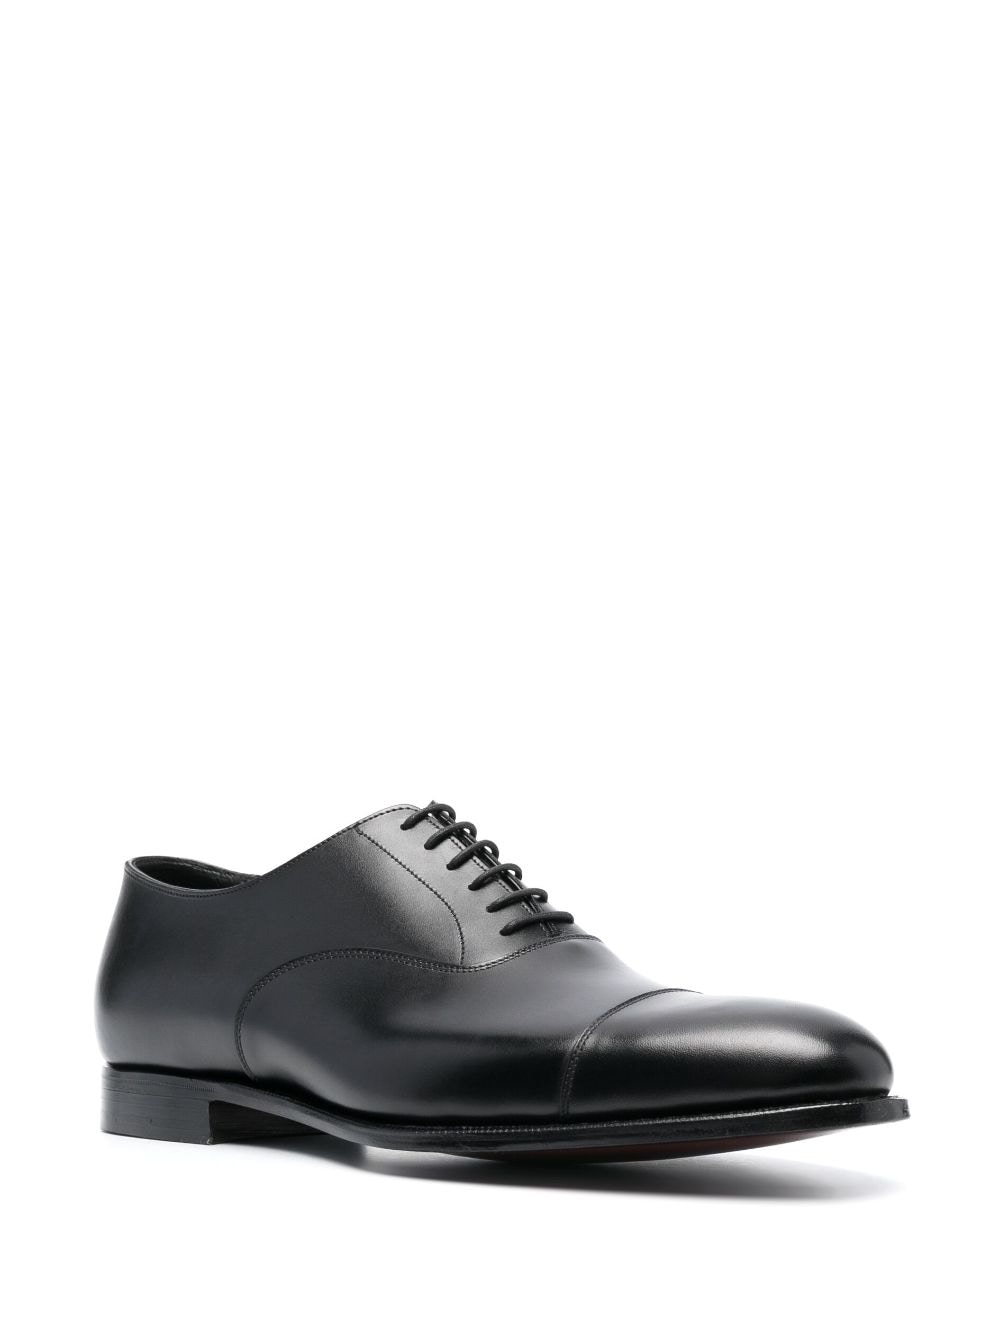 Crockett & Jones leather Oxford shoes Black